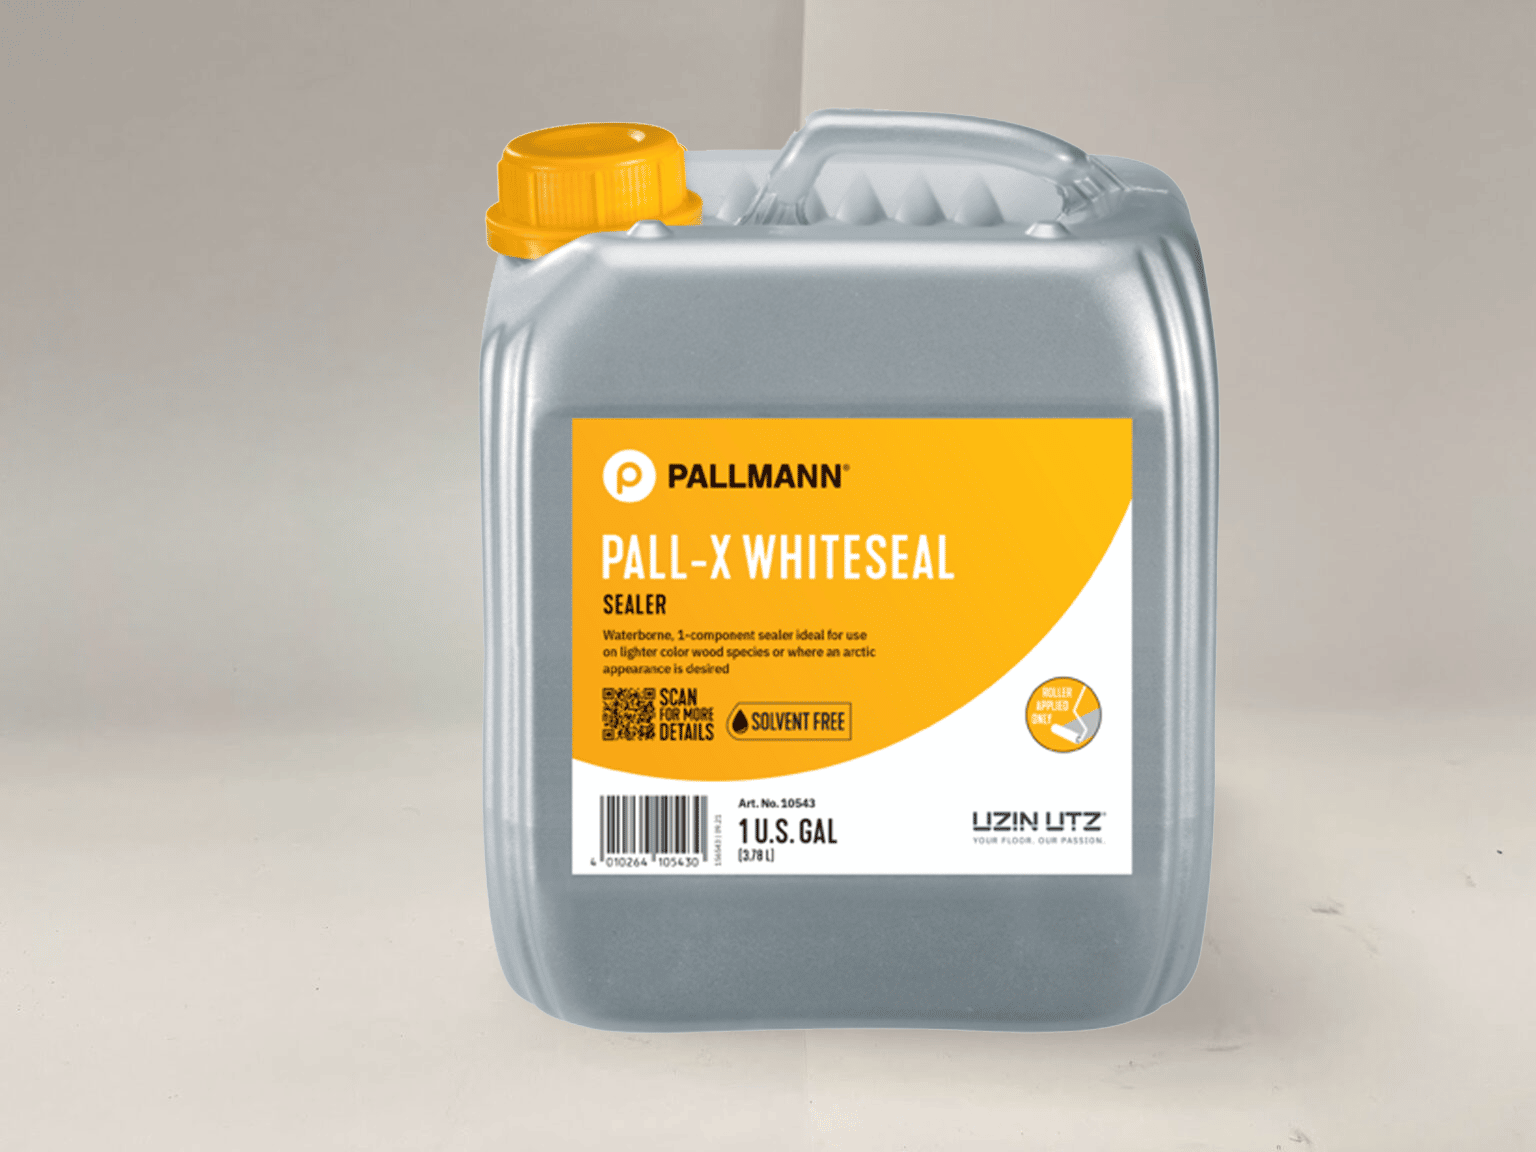 Pallmann Pall-X WhiteSeal